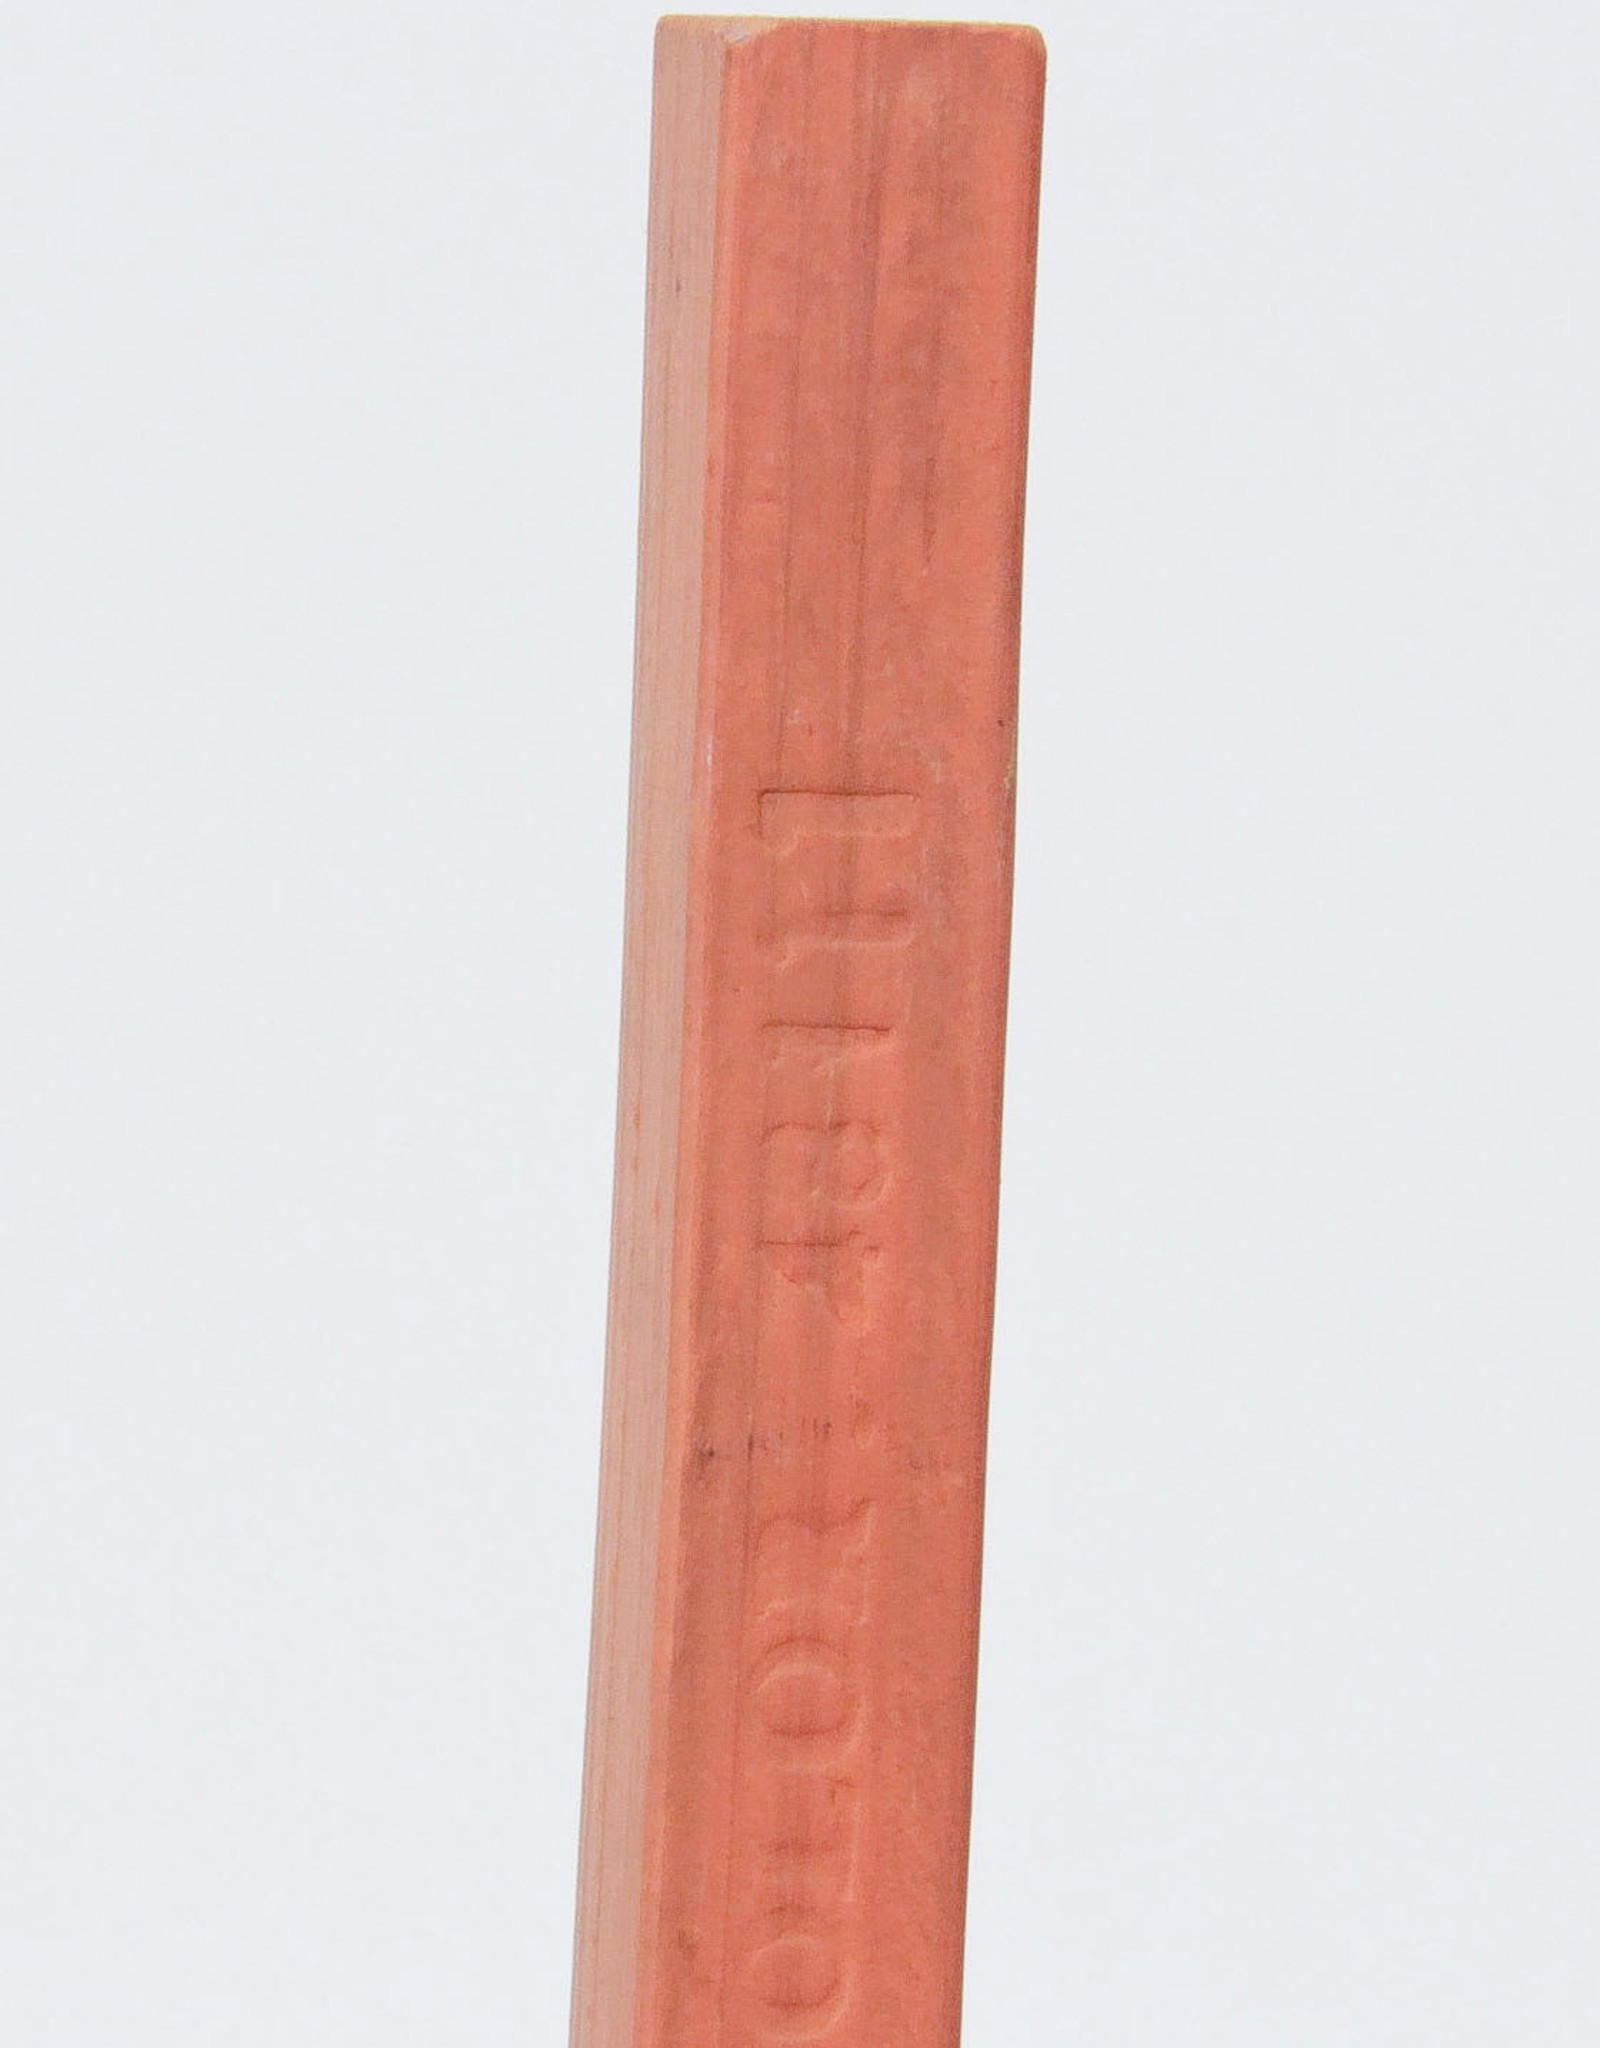 Cretacolor, Pastel Carre Stick, Orange